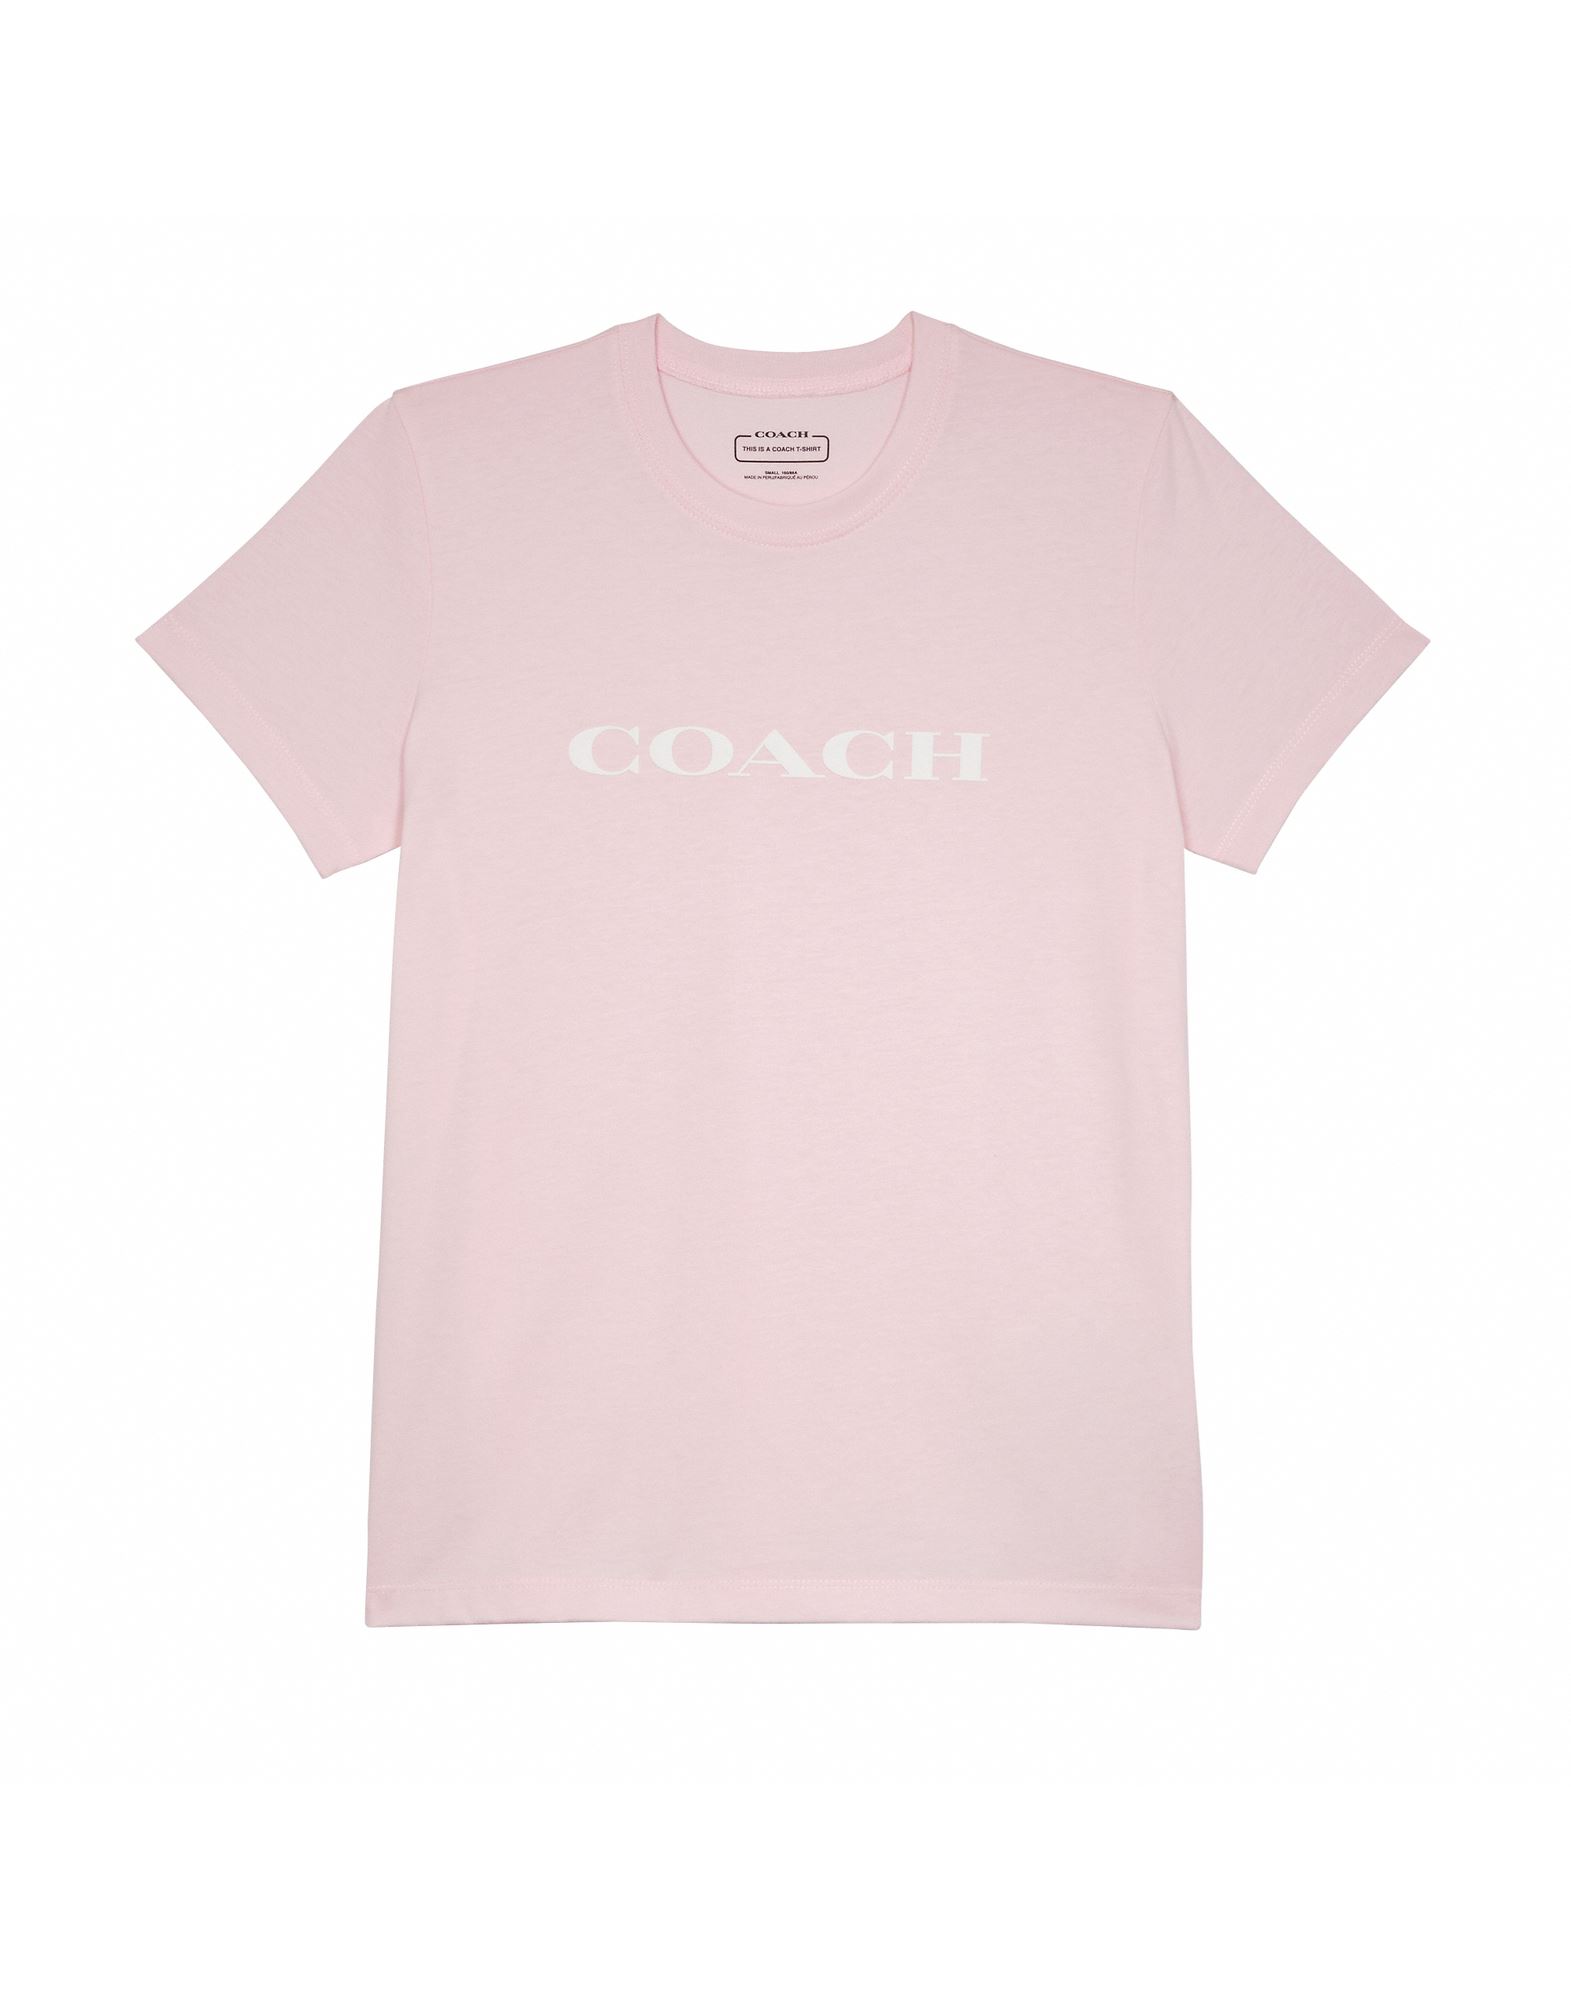 COACH T-shirts Damen Hellrosa von COACH